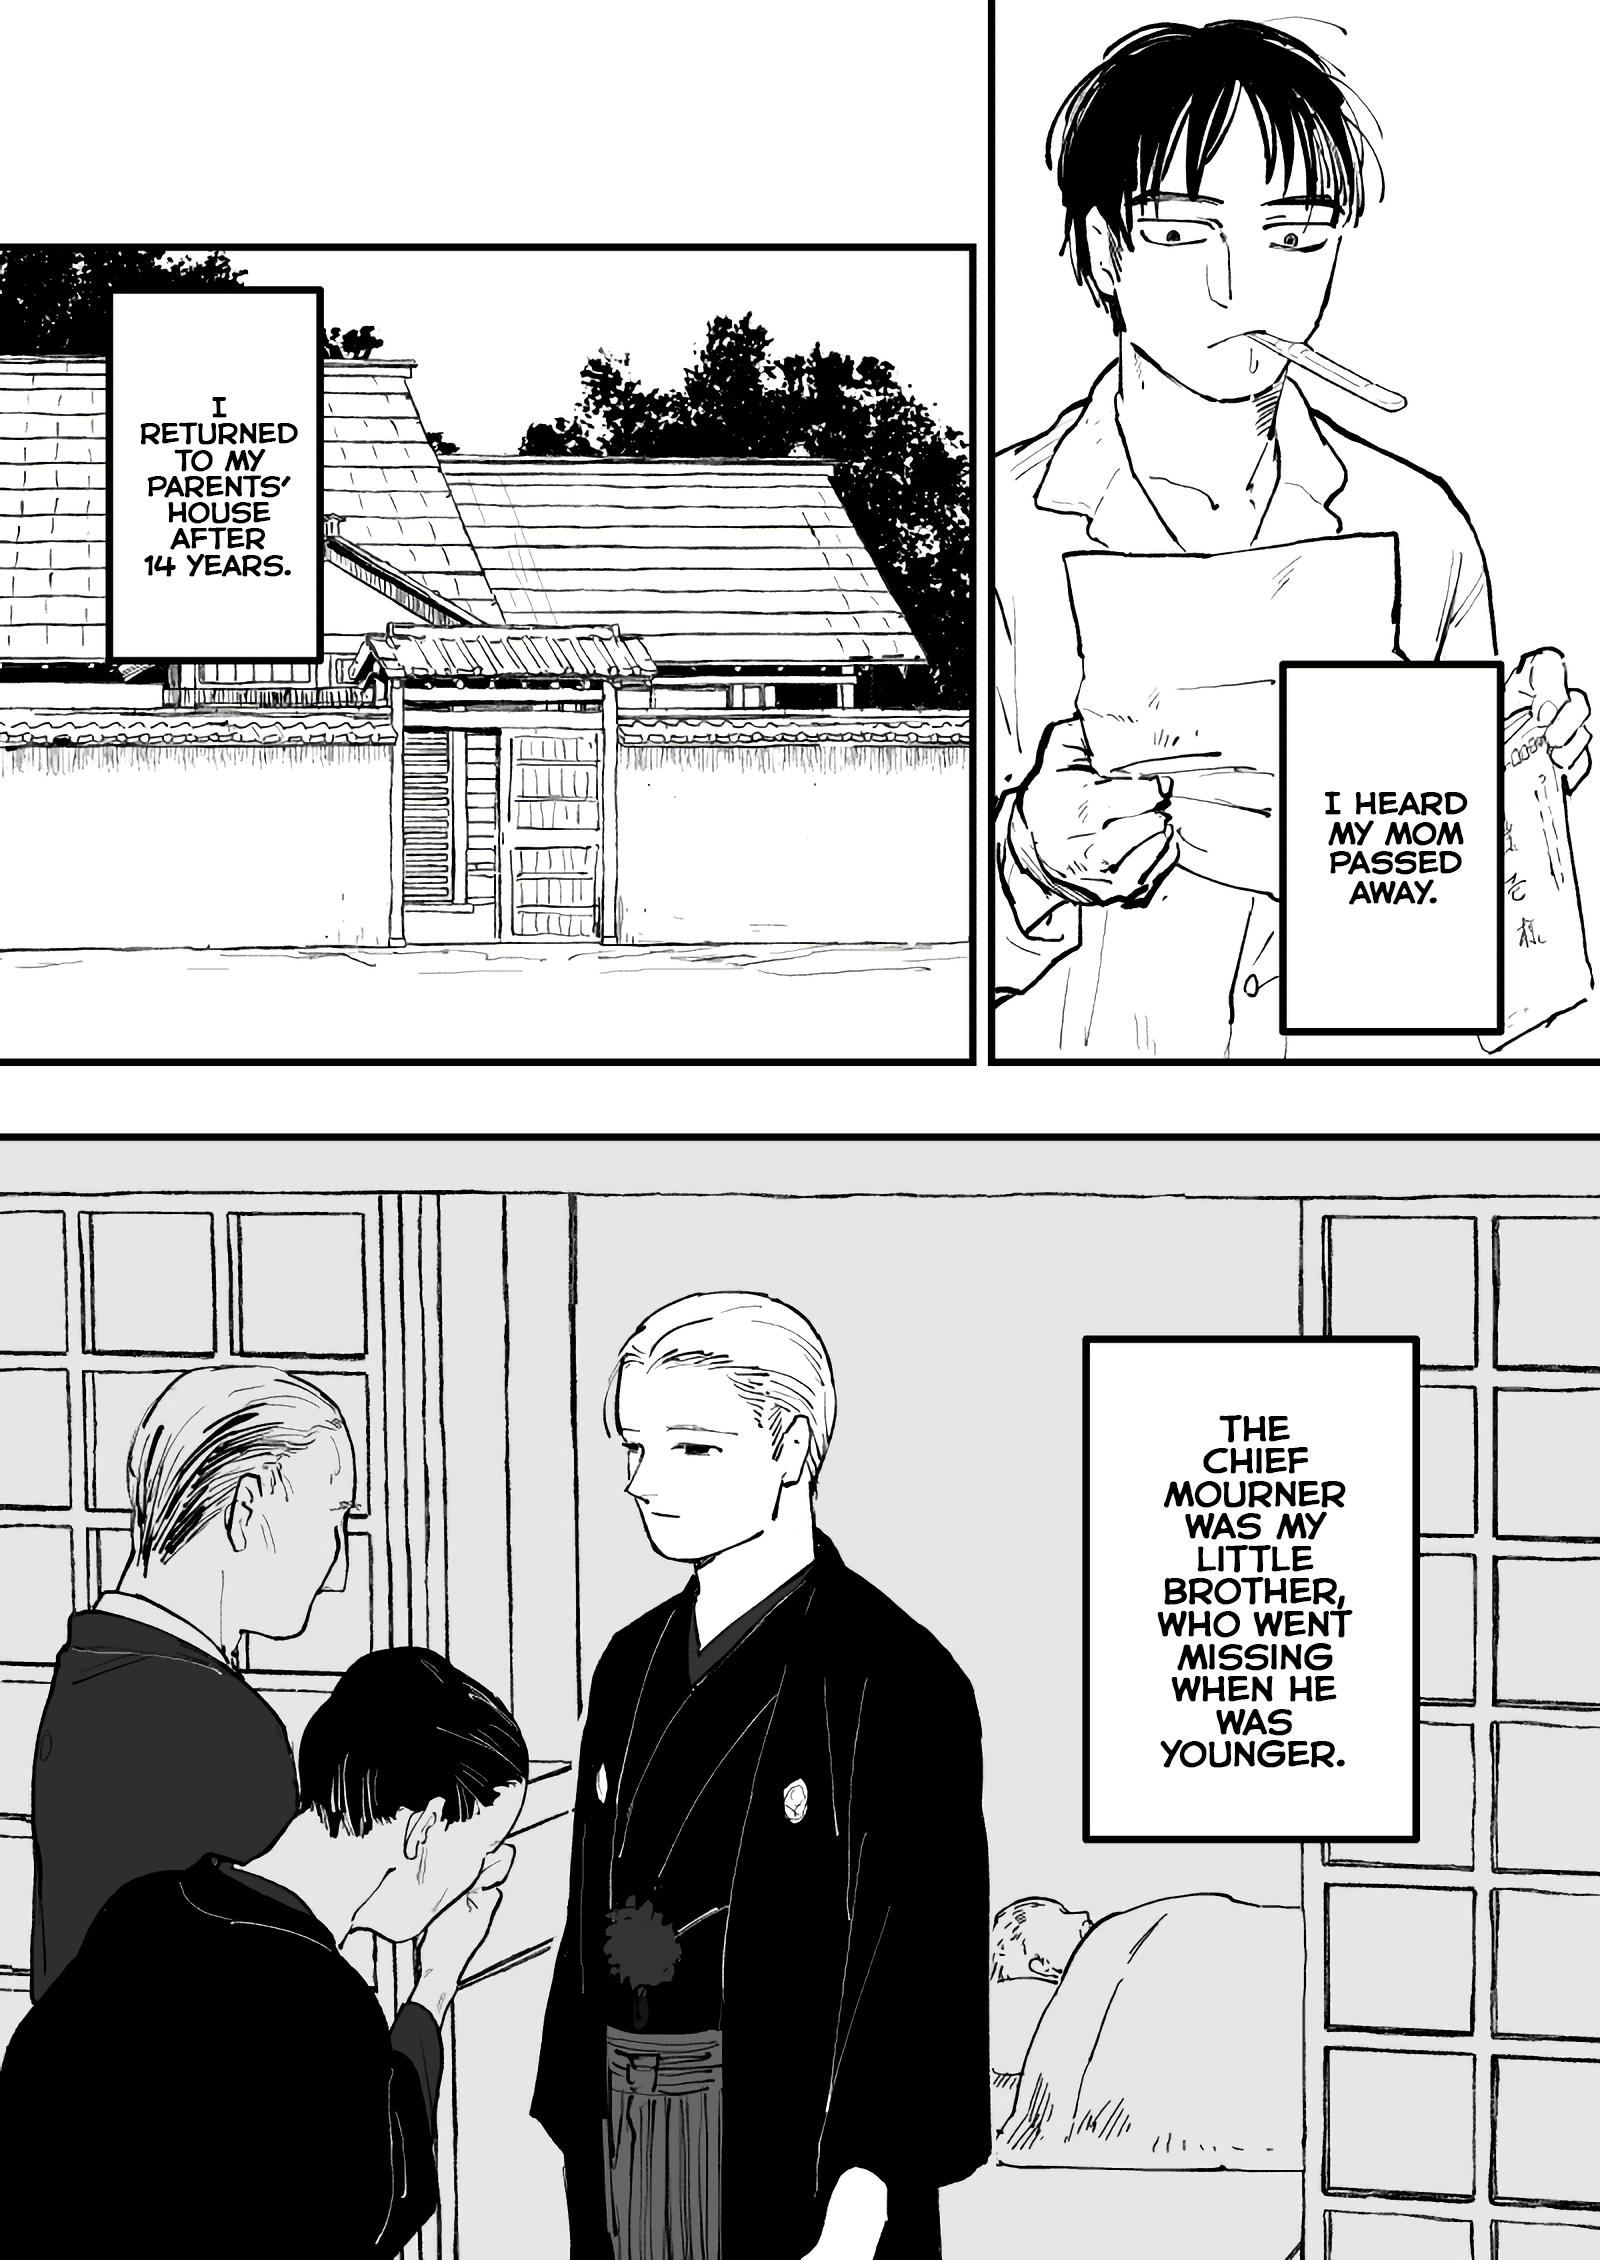 Little Brother manga